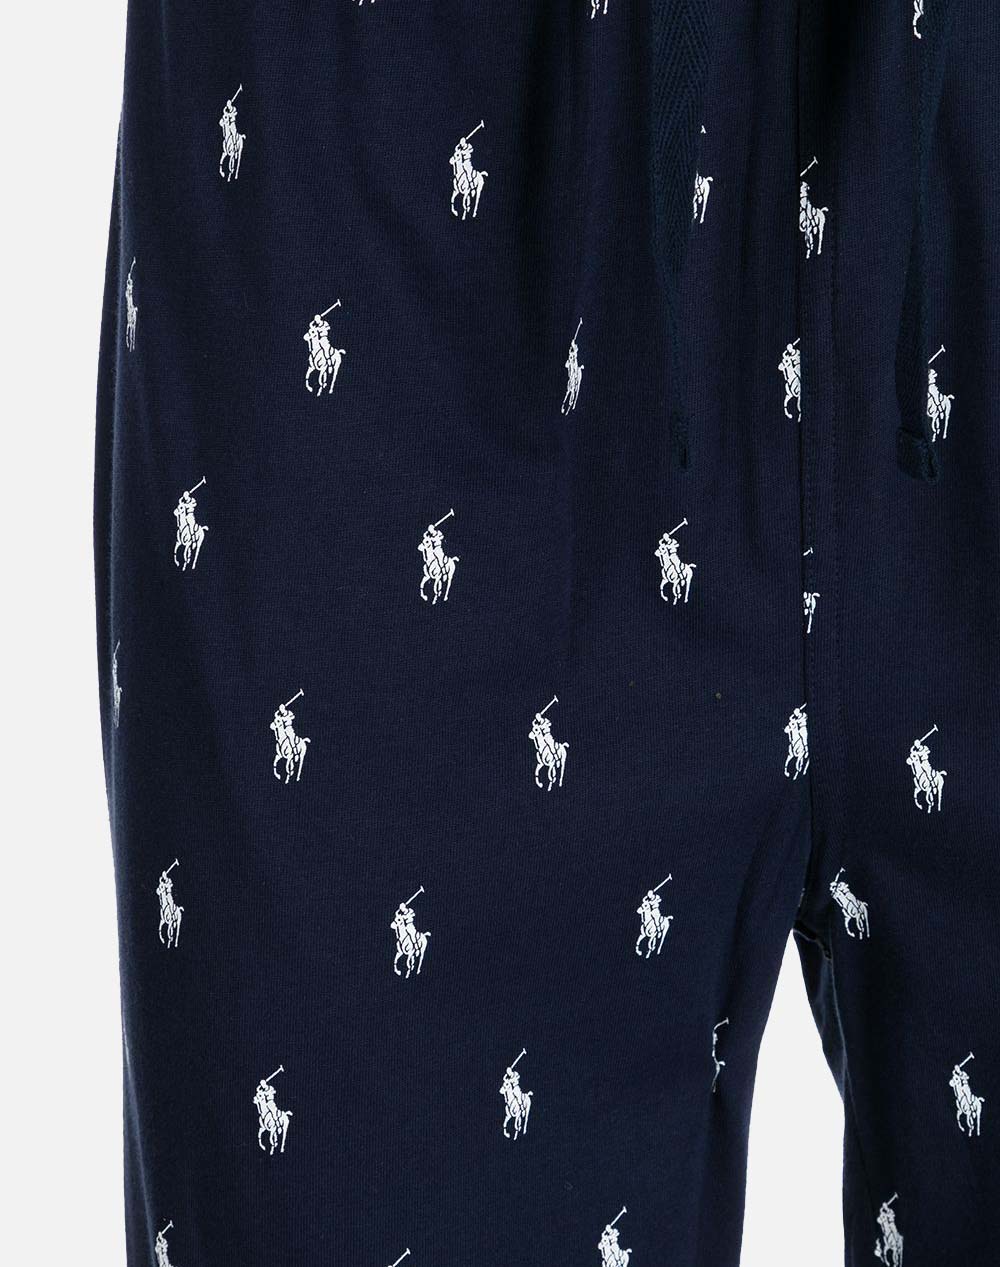 POLO RALPH LAUREN PRINTED LIQUID COTN-SPN-SLB TROUSERS Pajamas